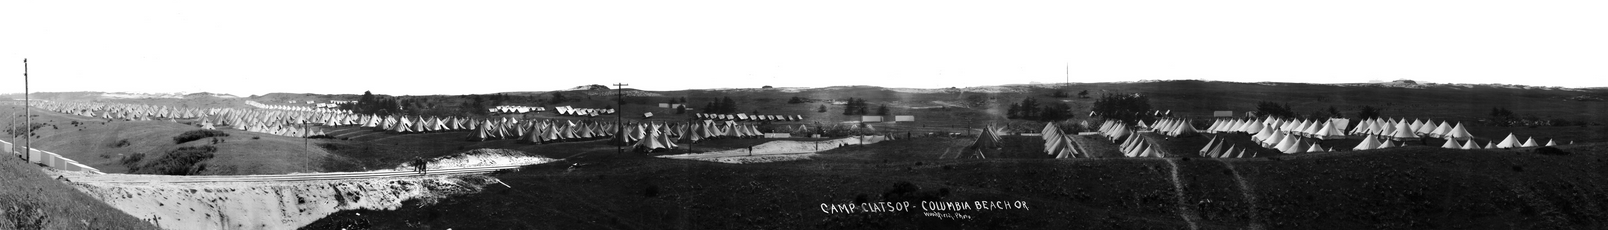 Camp Clatsop